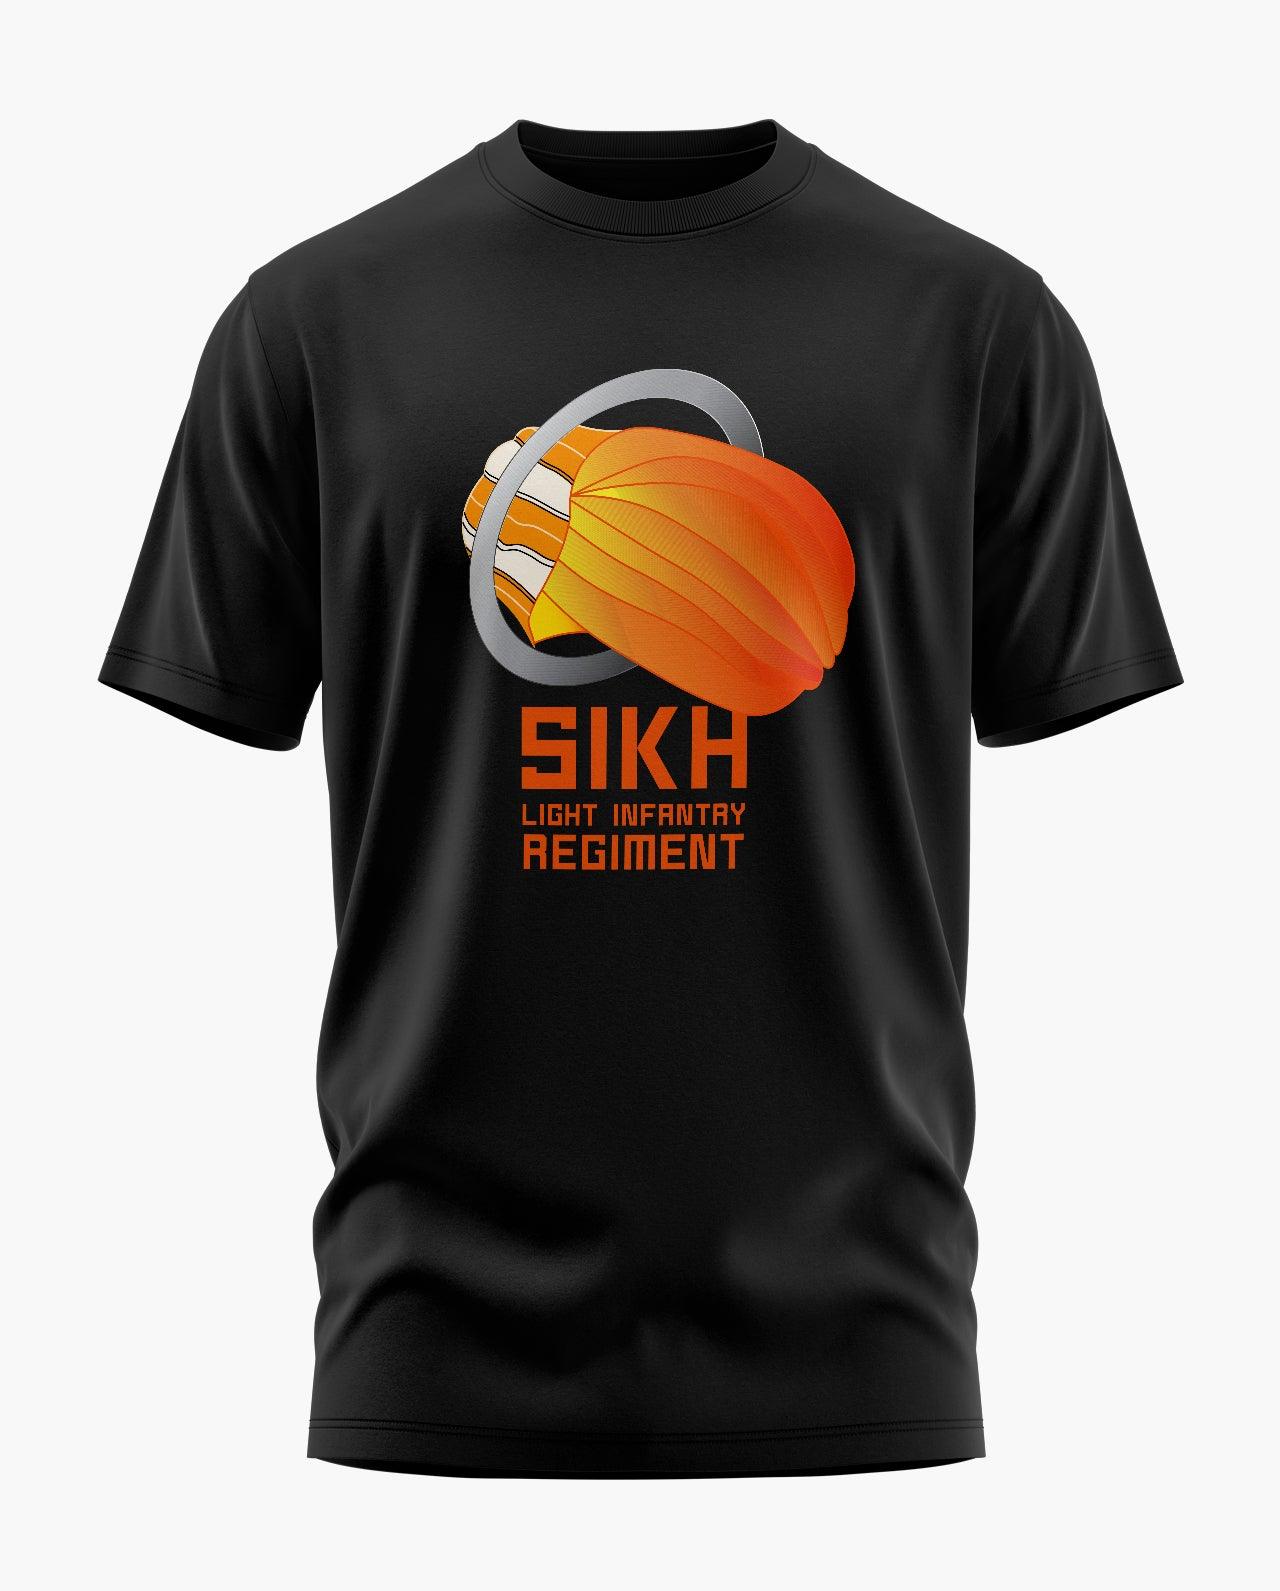 Sikh Li Regiment T-Shirt - Aero Armour